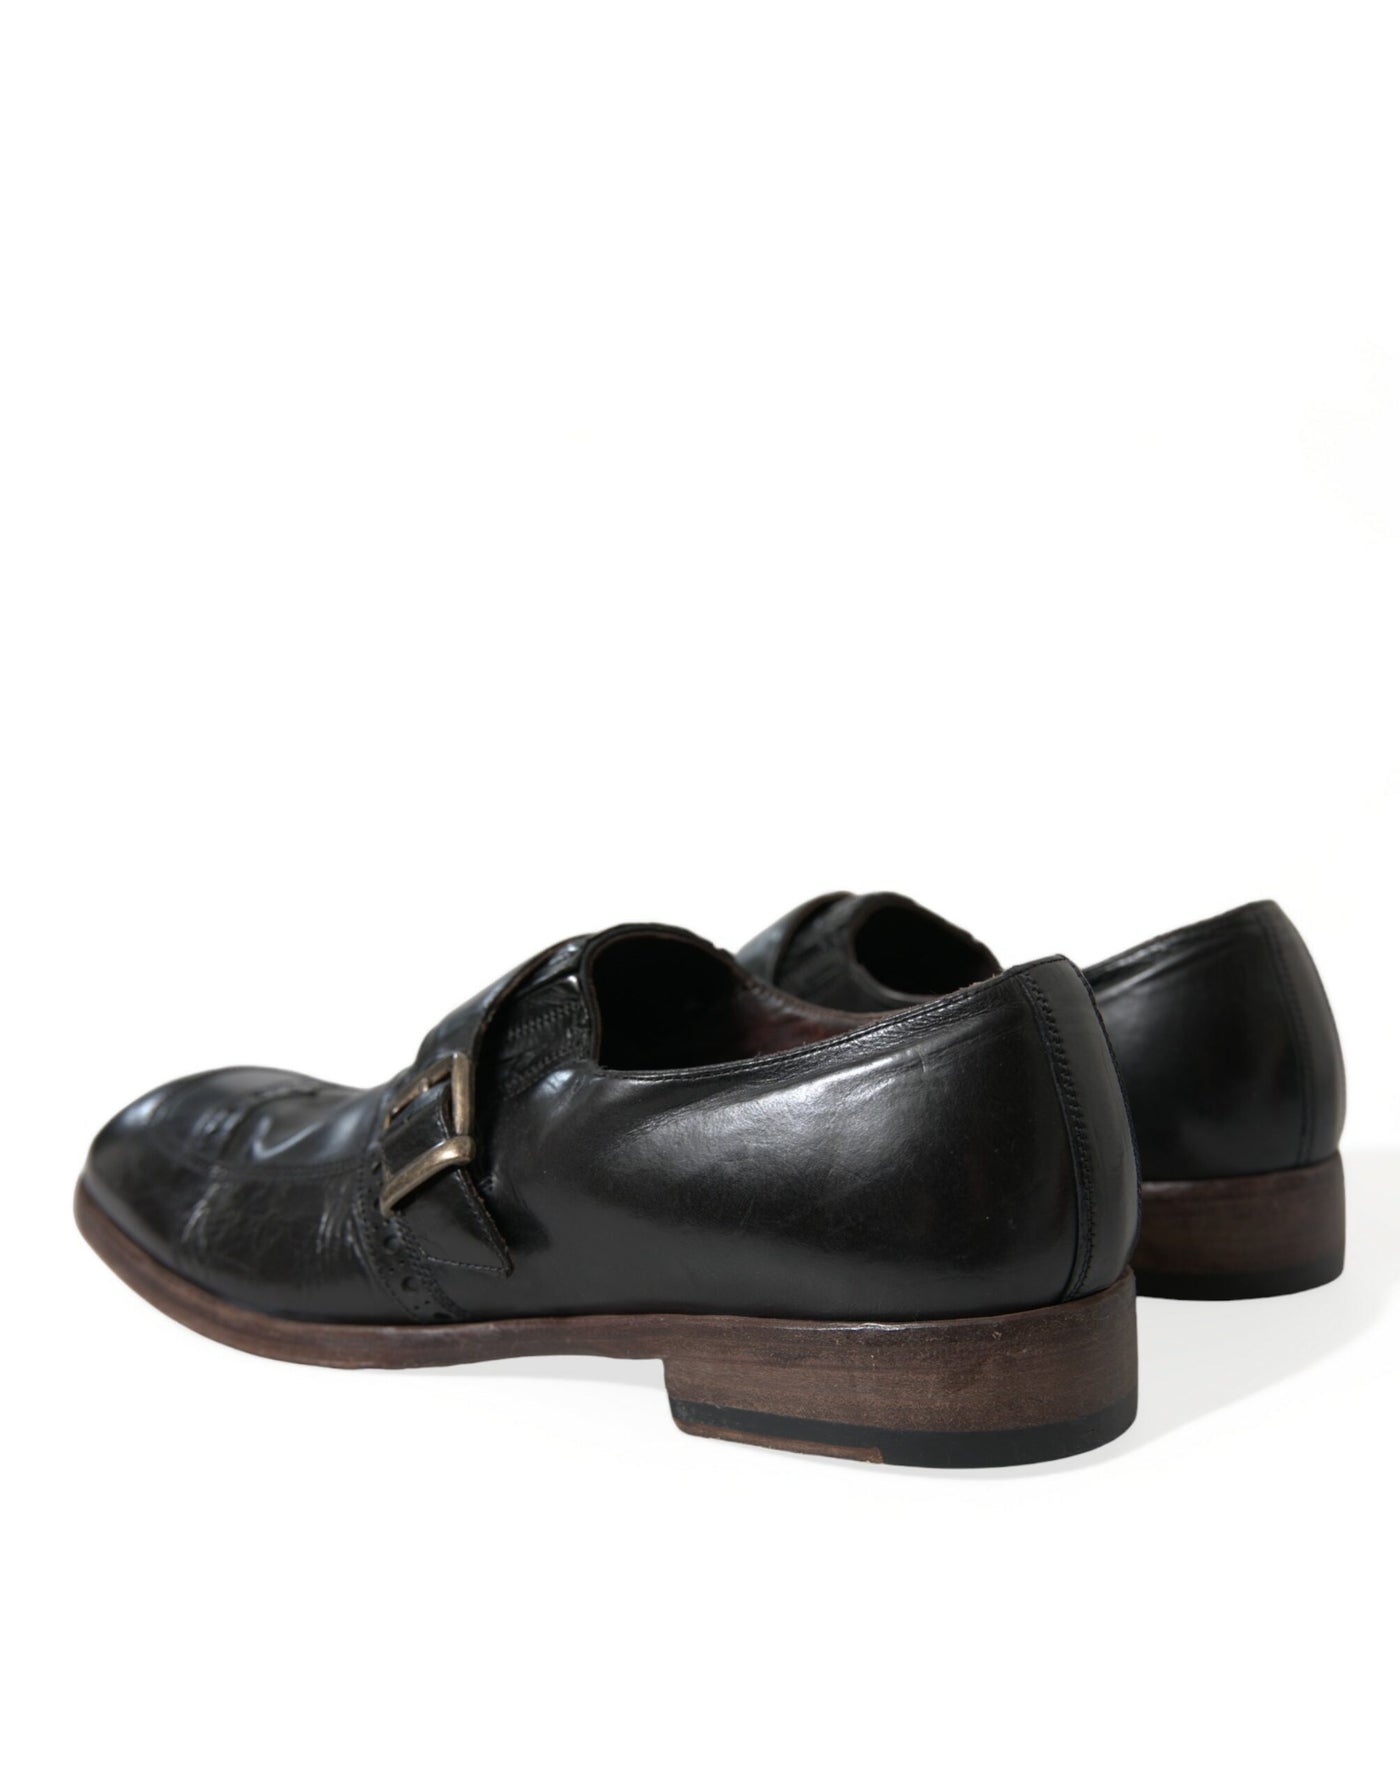 Dolce & Gabbana Black Leather Strap Mocassin Dress Shoes